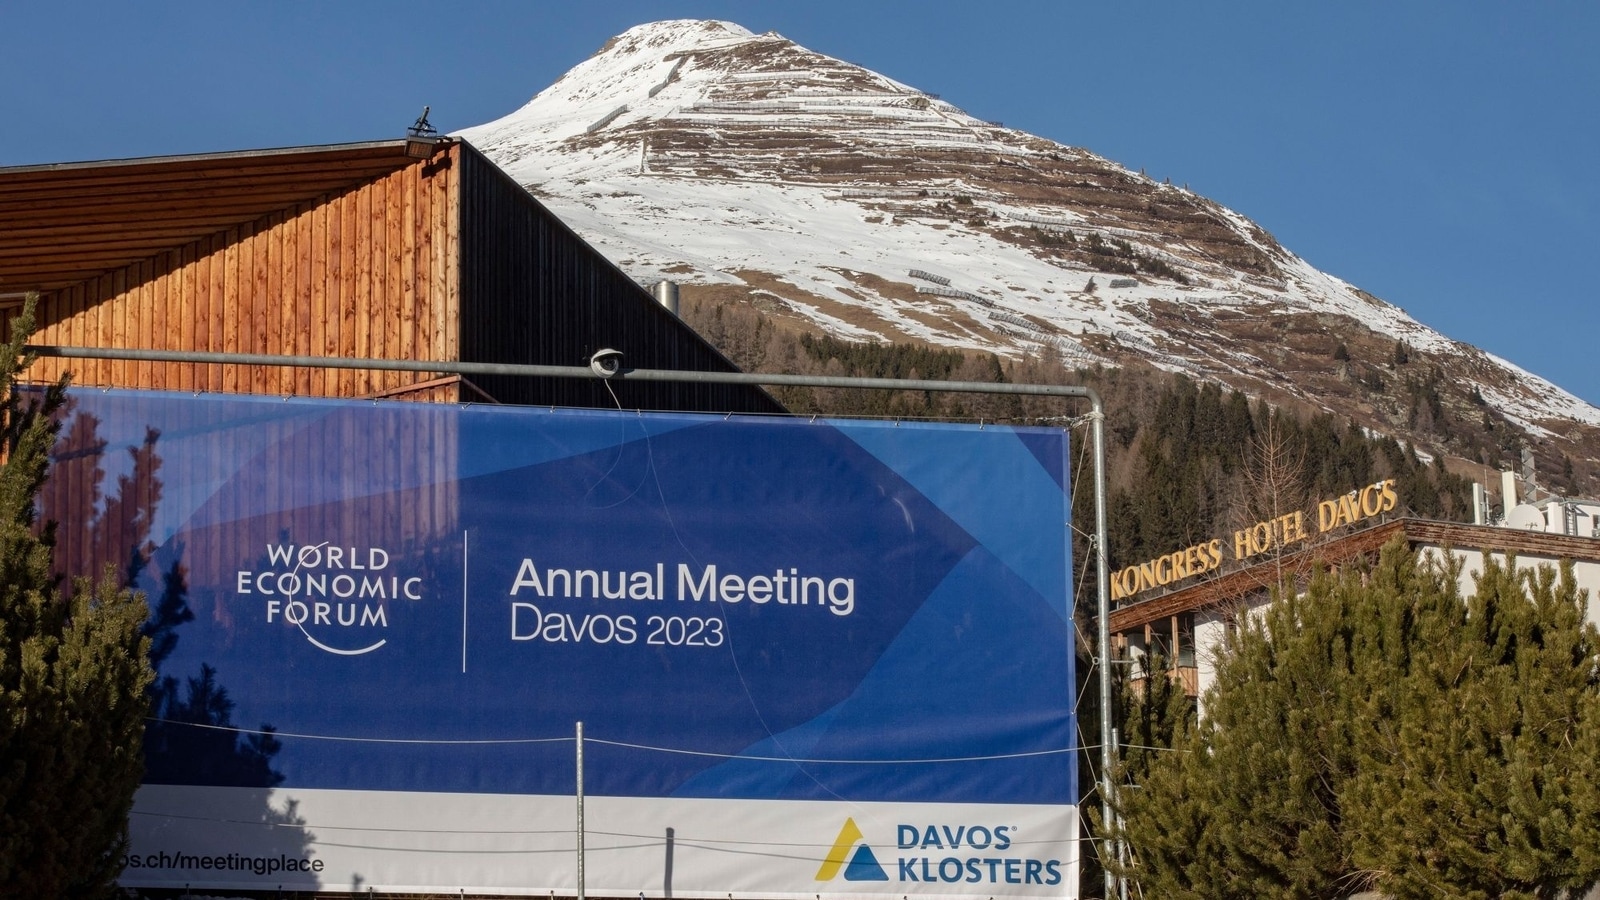 World Economic Forum 2023 summit kicks off at Davos on Jan 16 10 top